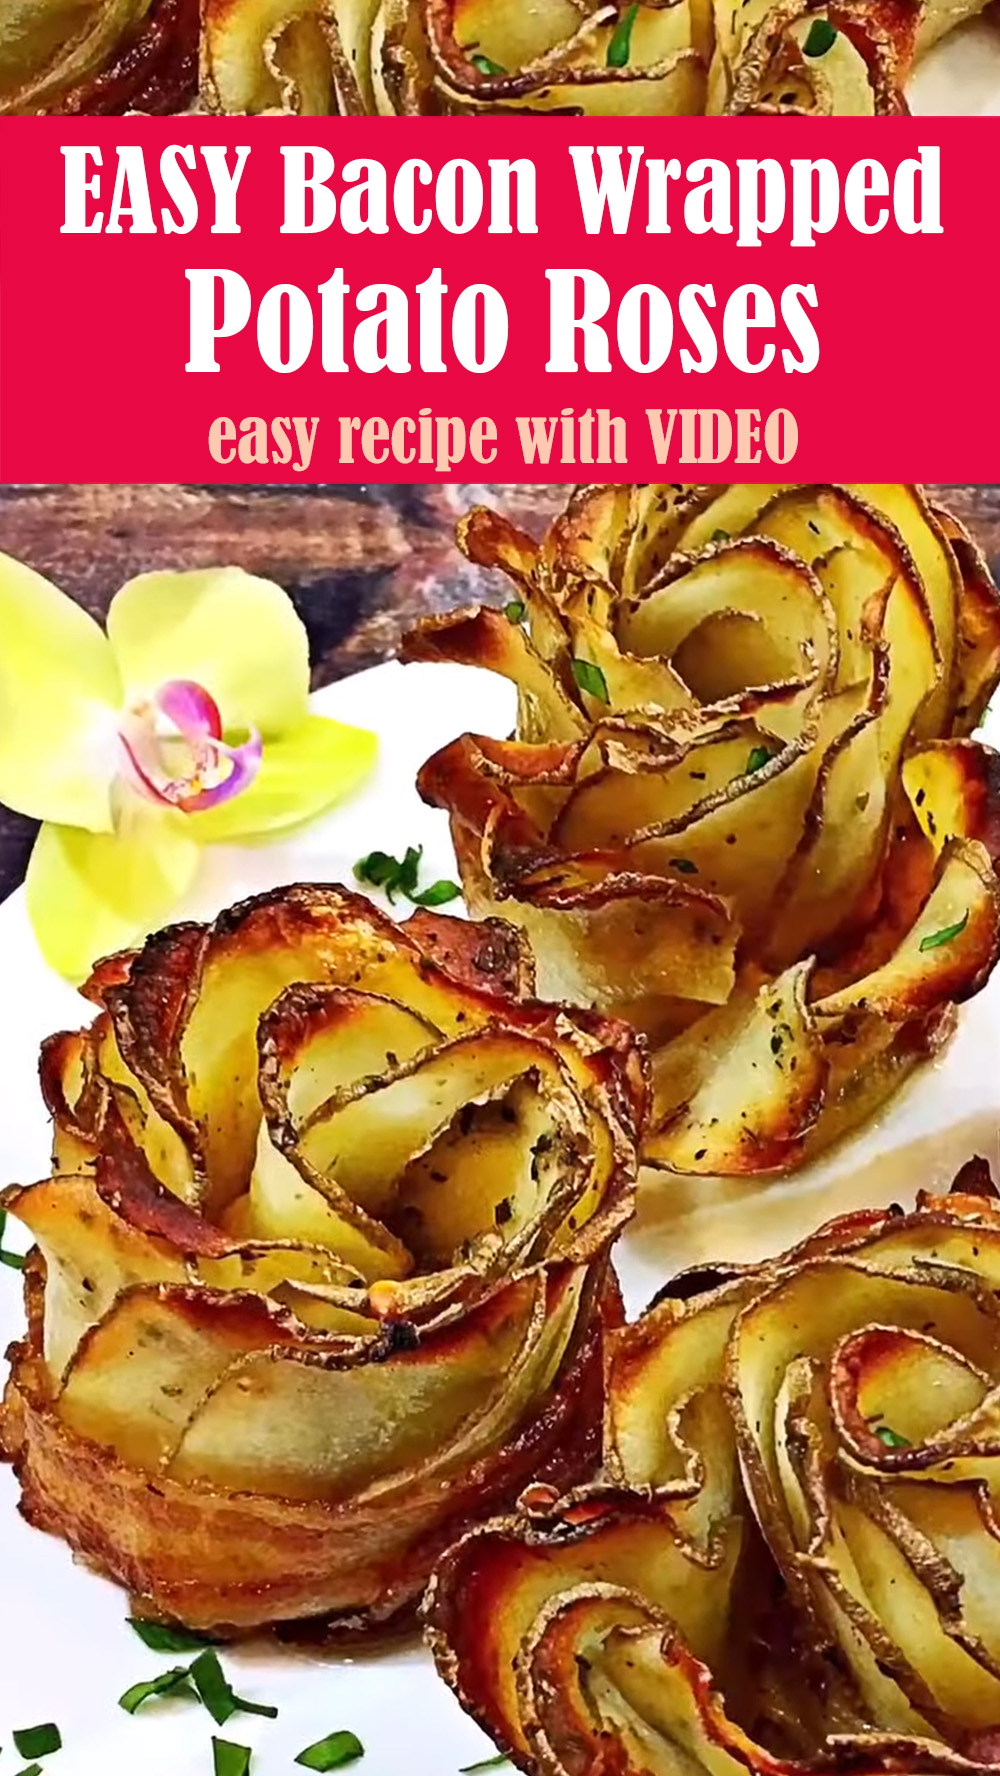 EASY Bacon Wrapped Potato Roses